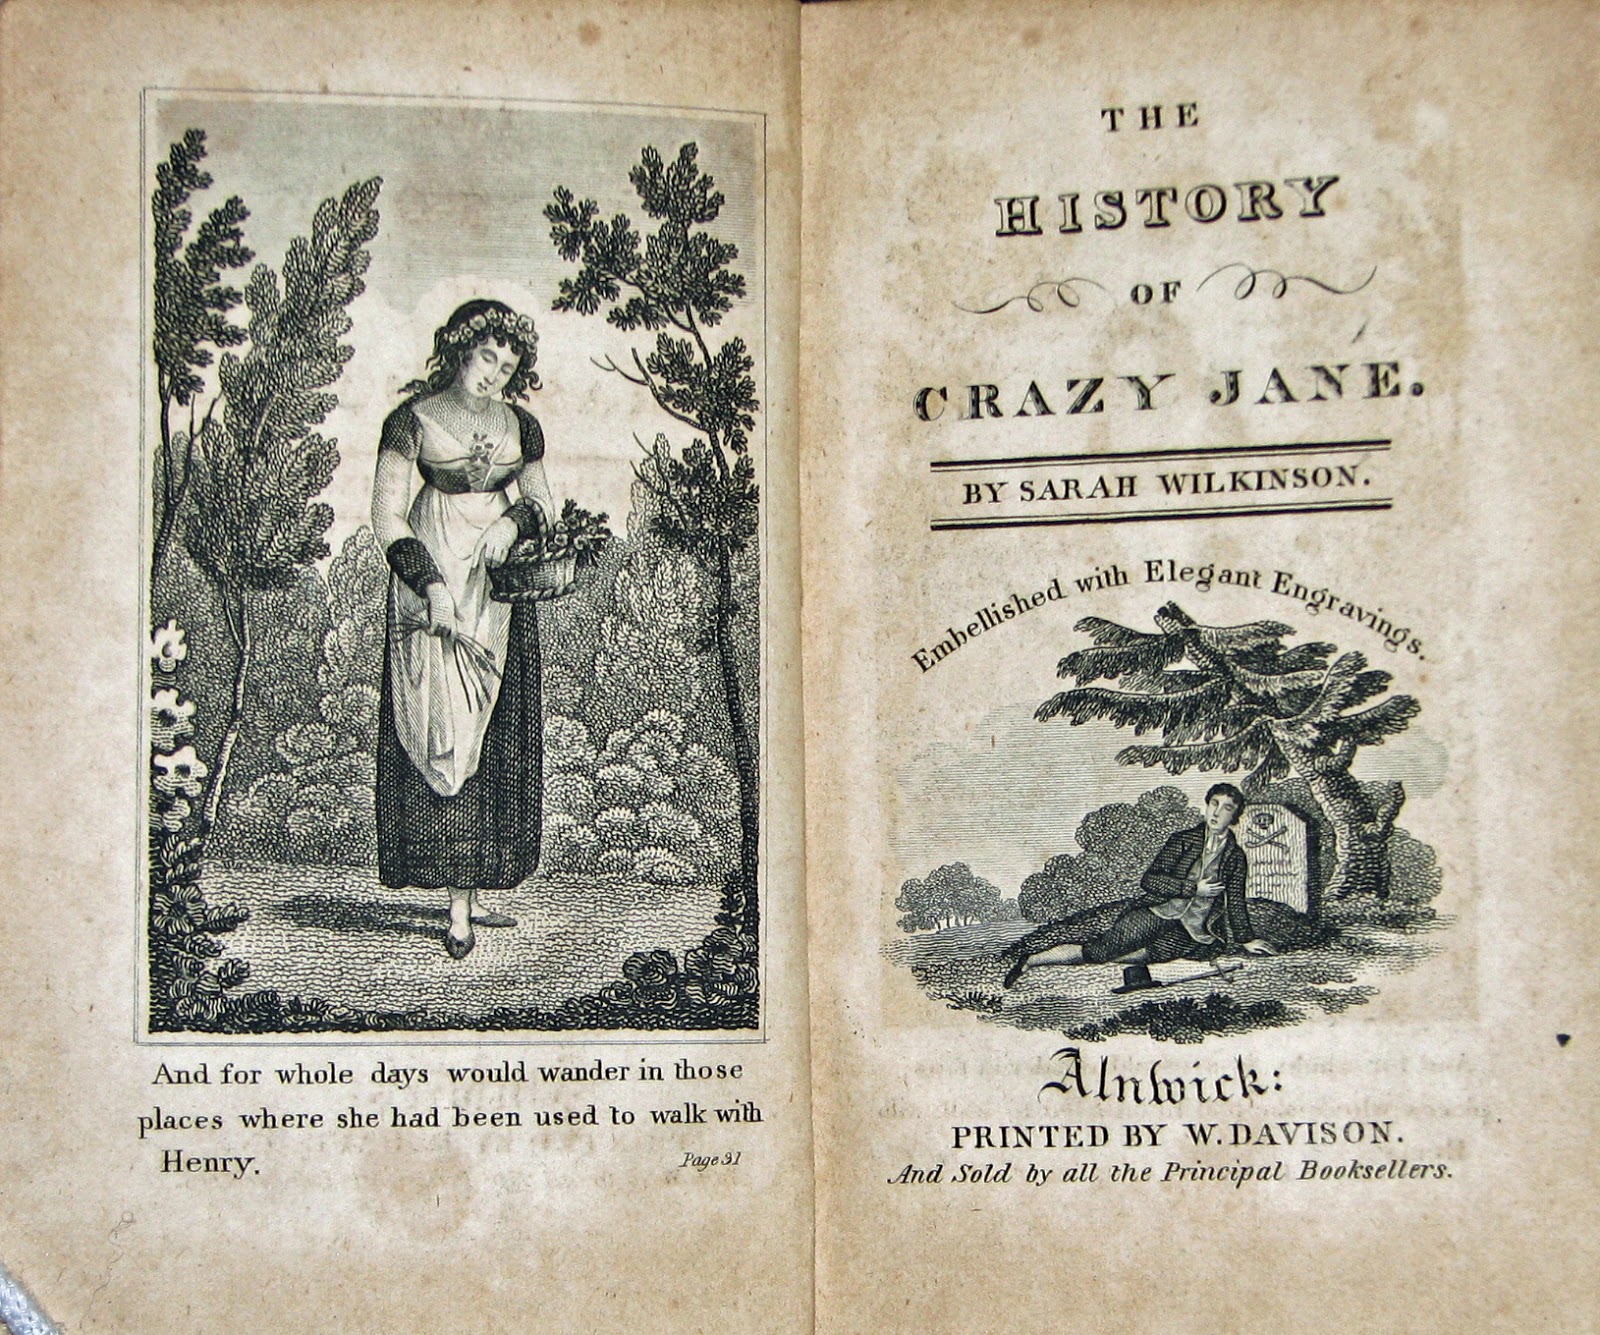 Tragical History Of Crazy Jane.JPG